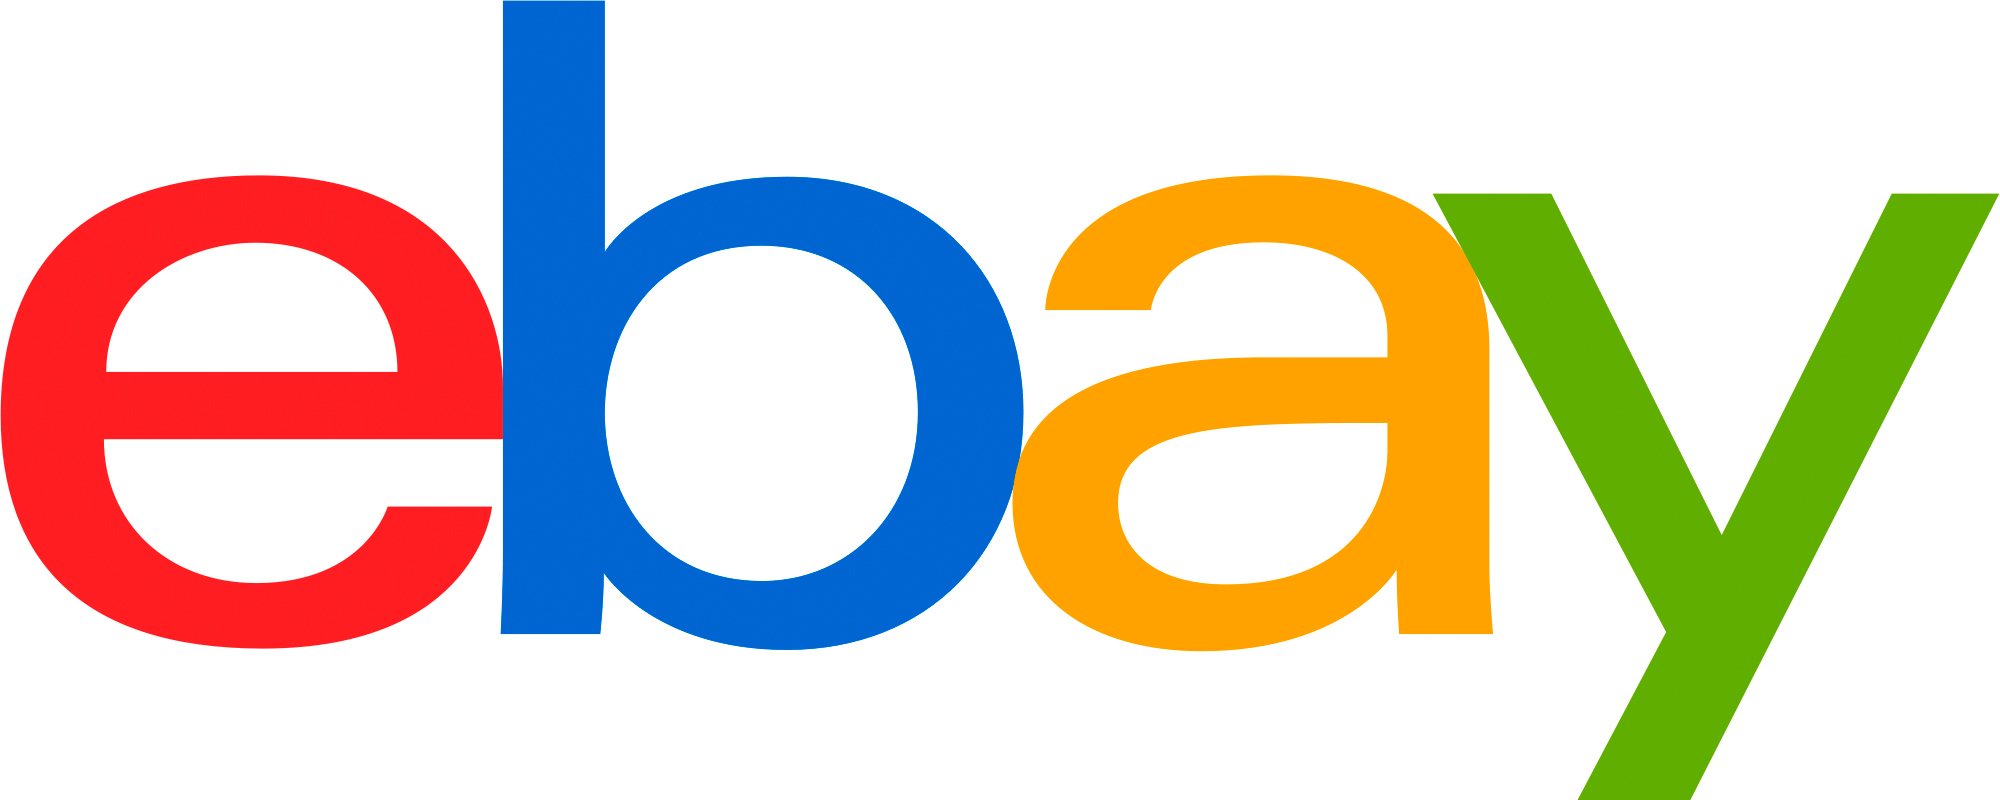 Logo of Piquee's client Ebay